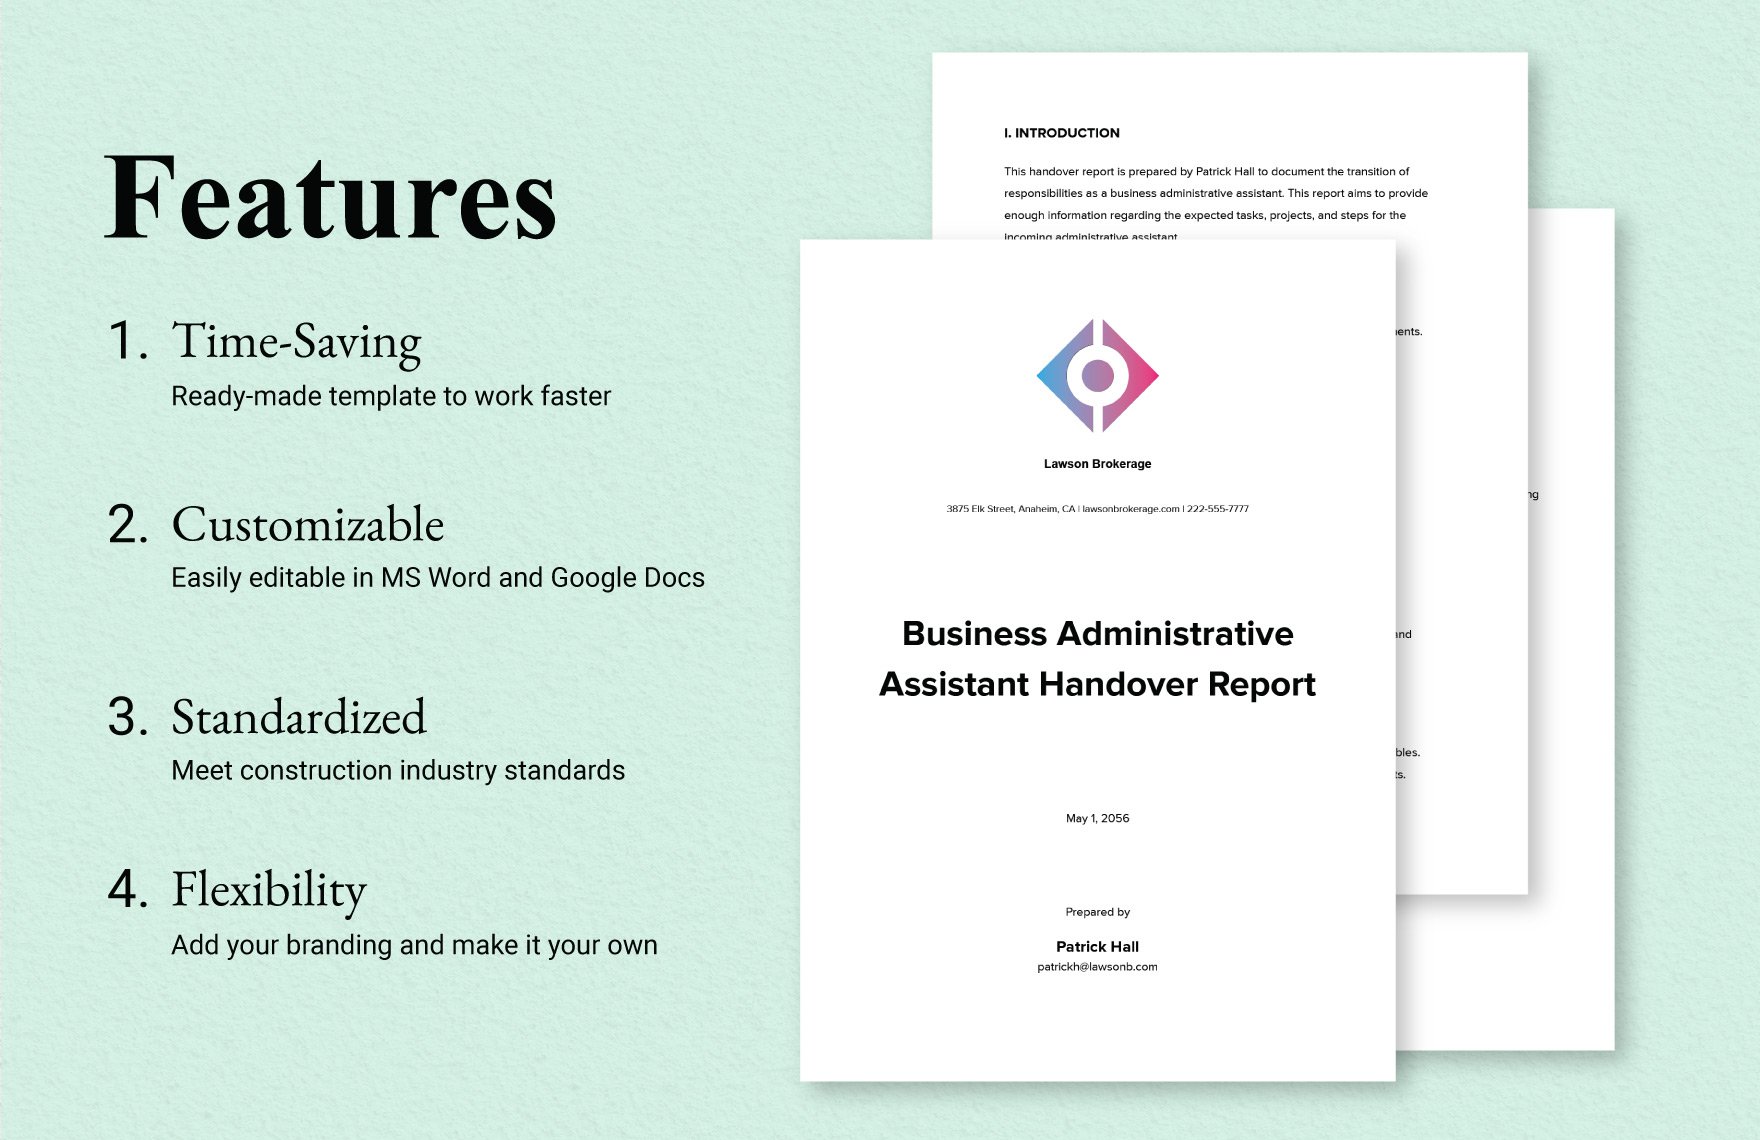 Business Administrative Assistant Handover Report